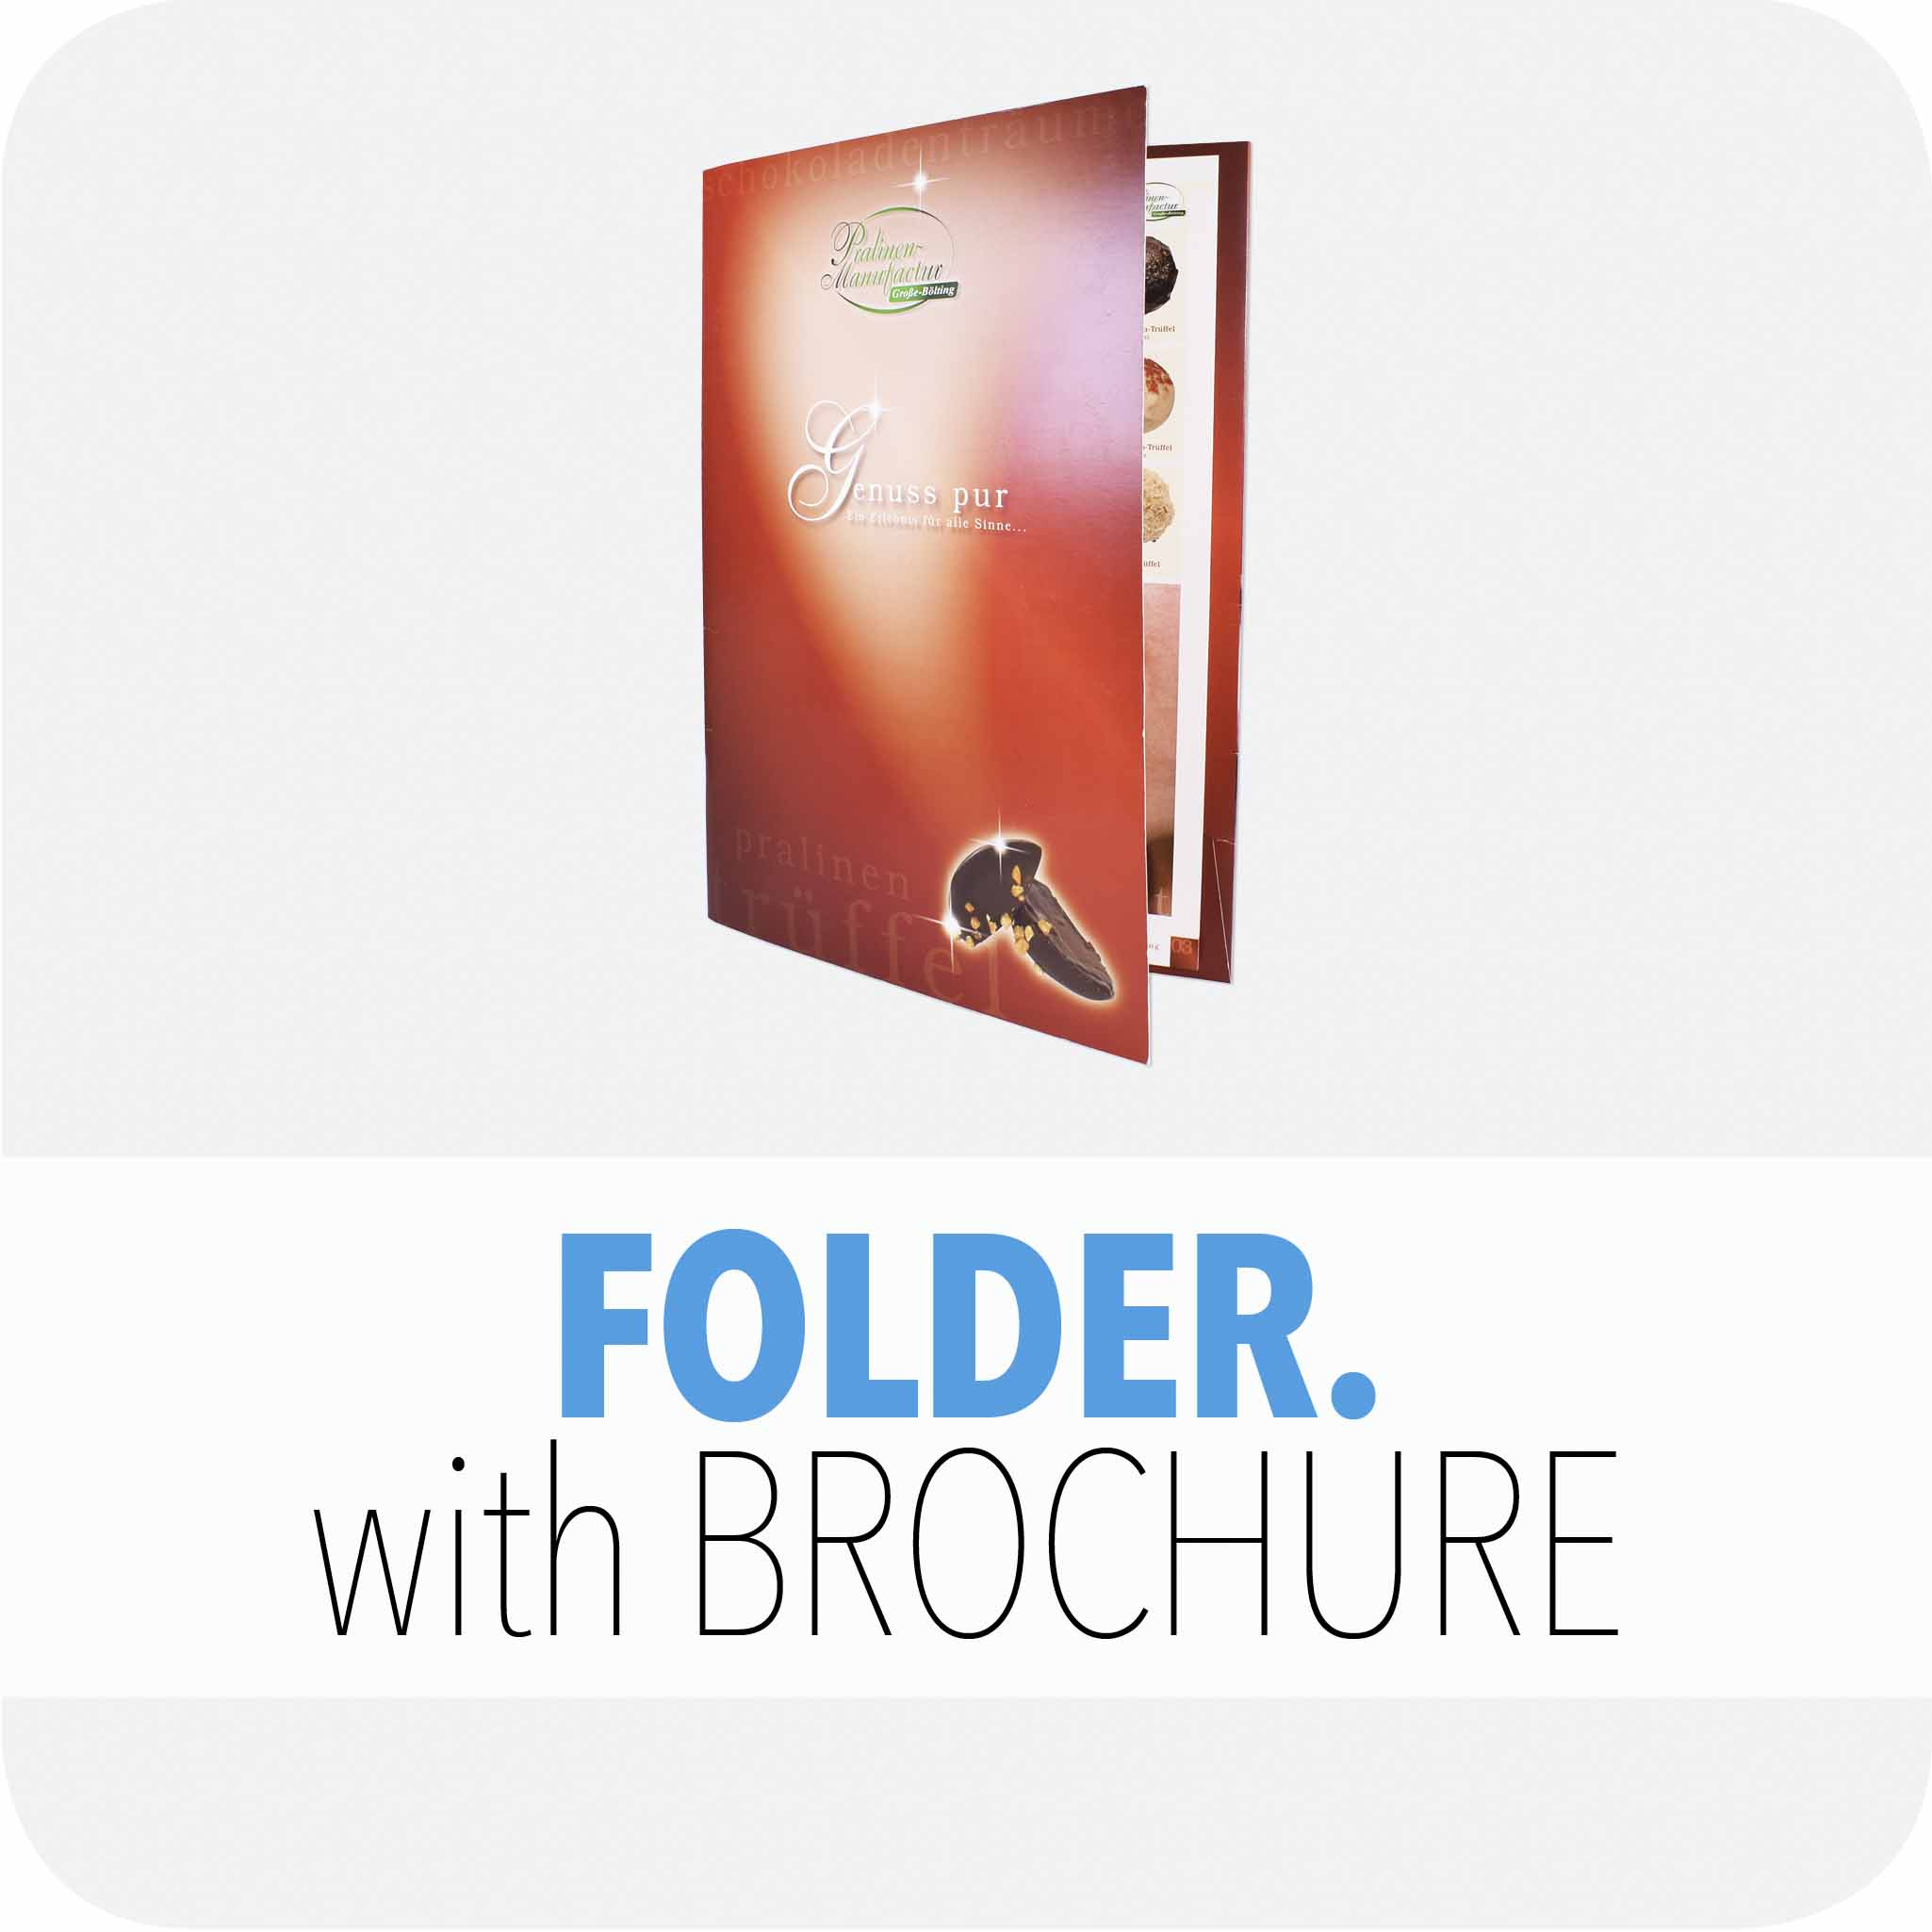 Folder with brochure